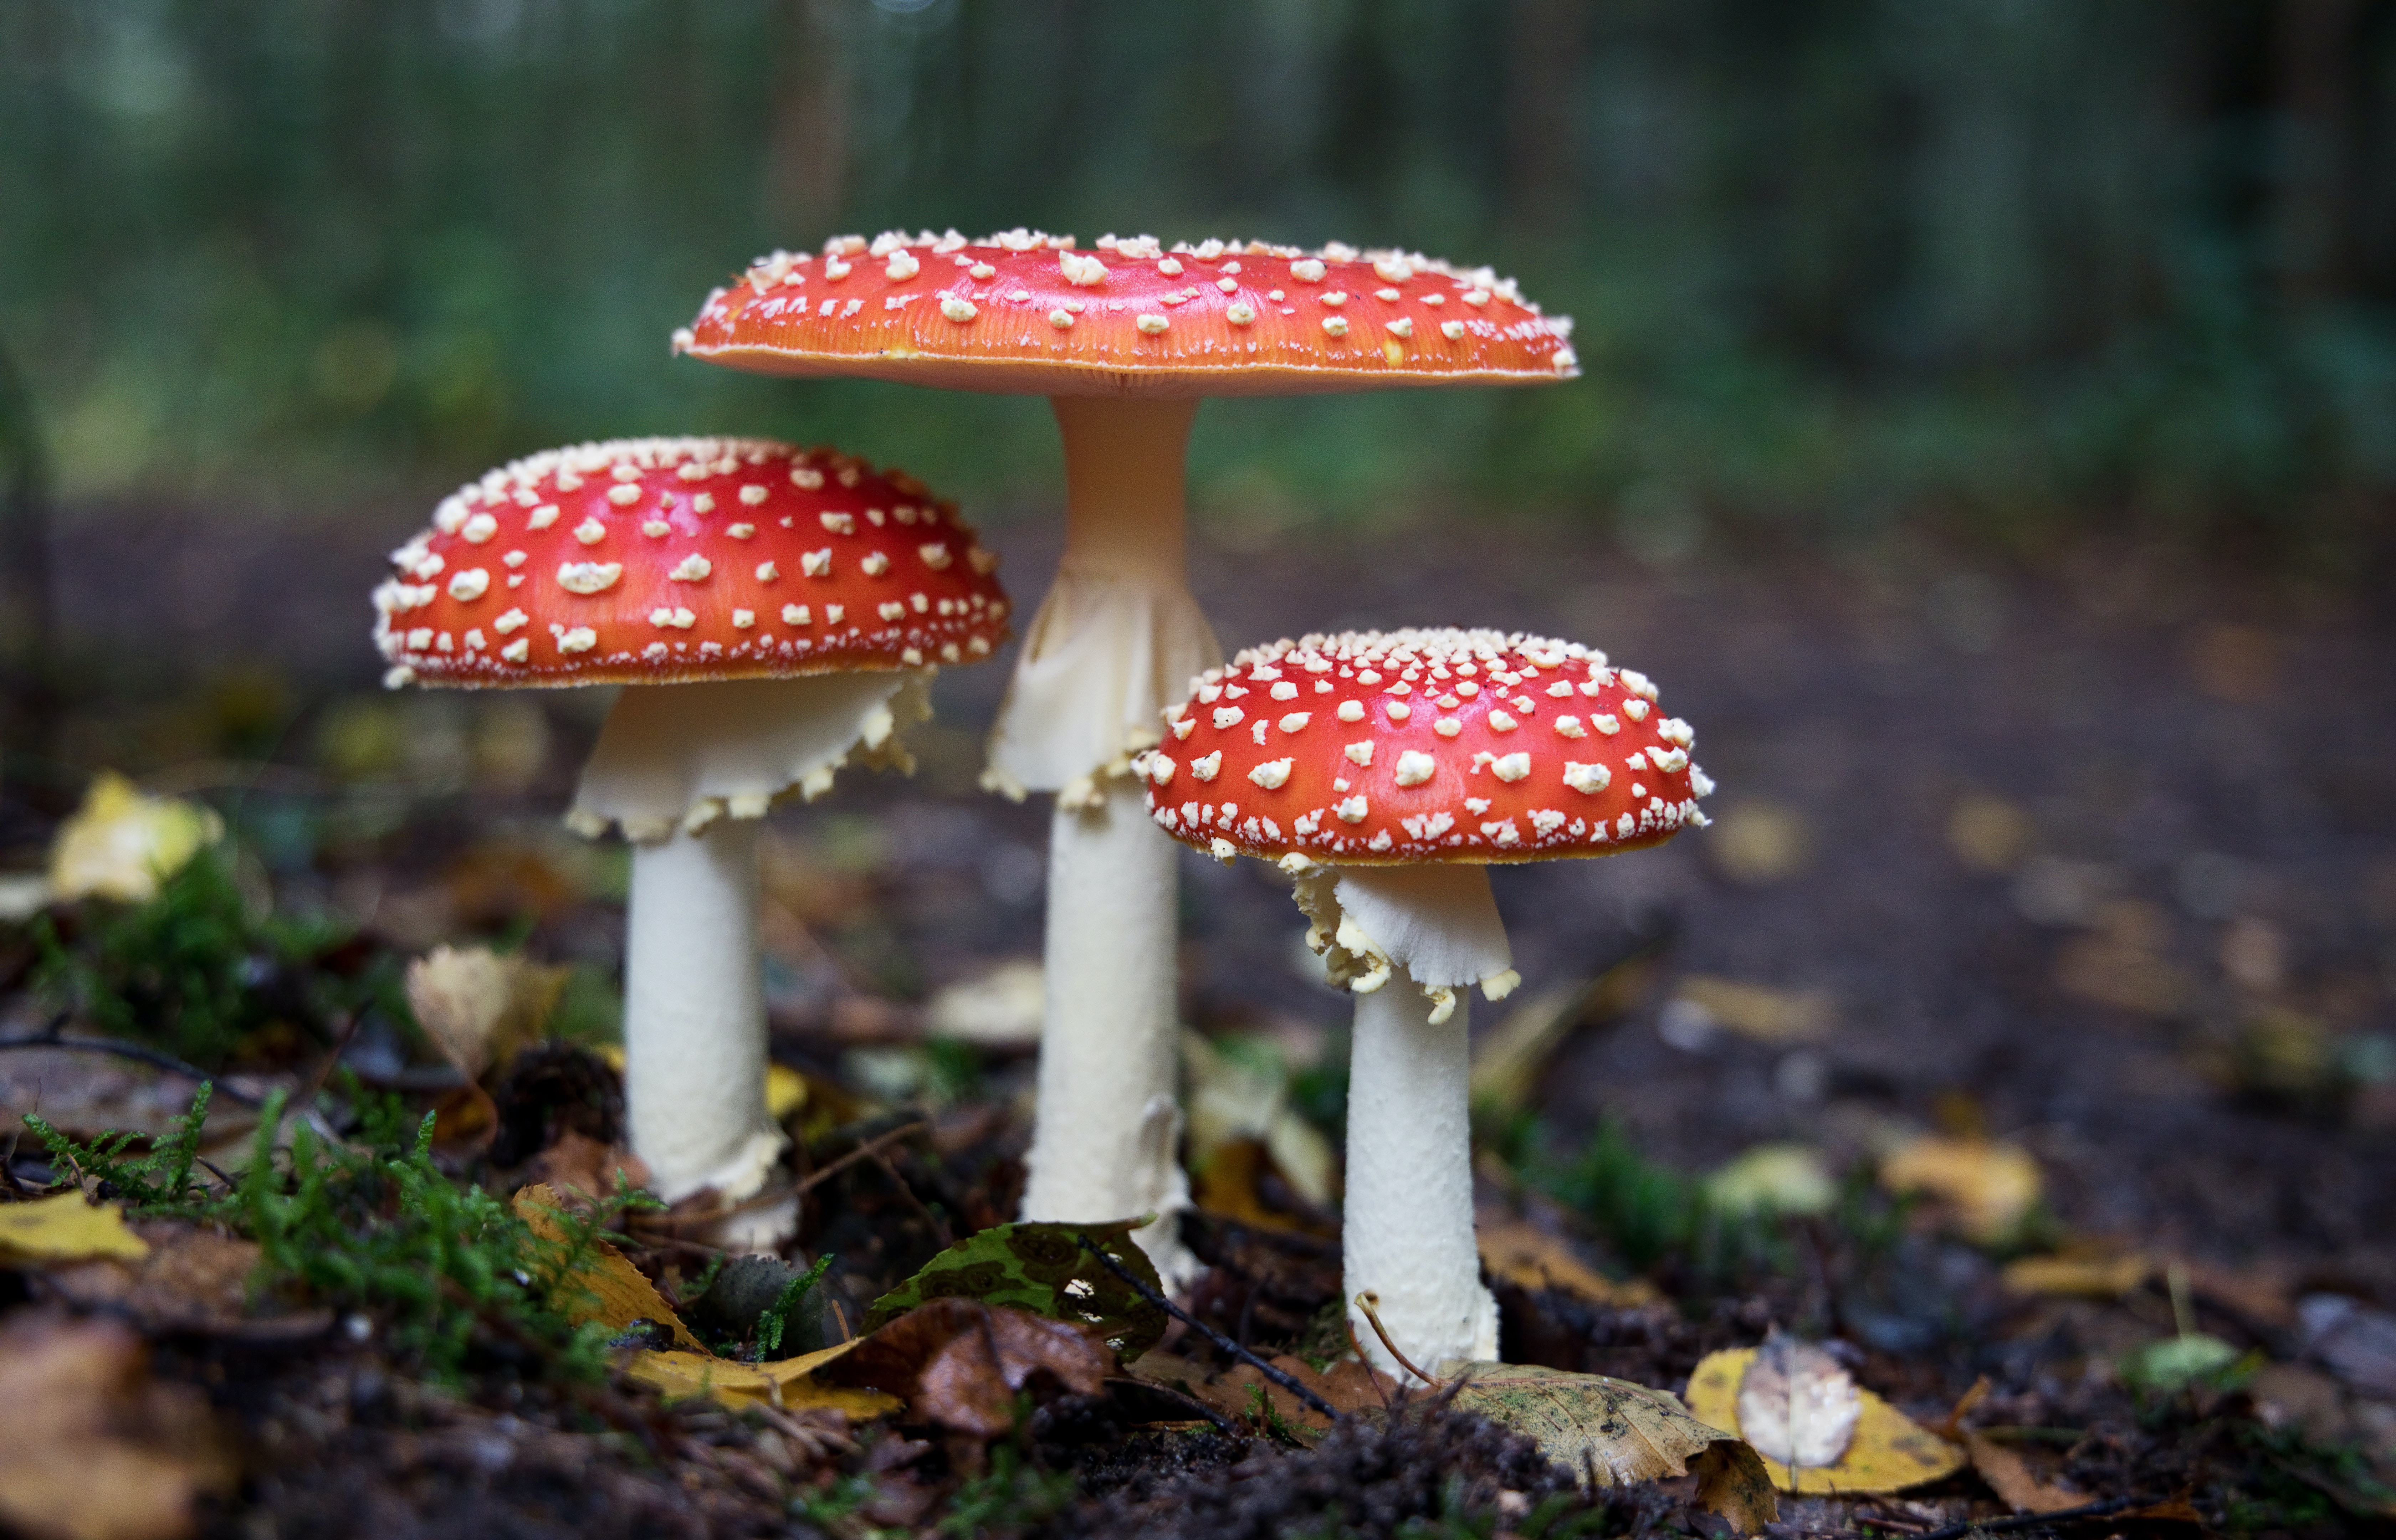 How Do Mushroom Supplements Make You Feel A Healthier Life?